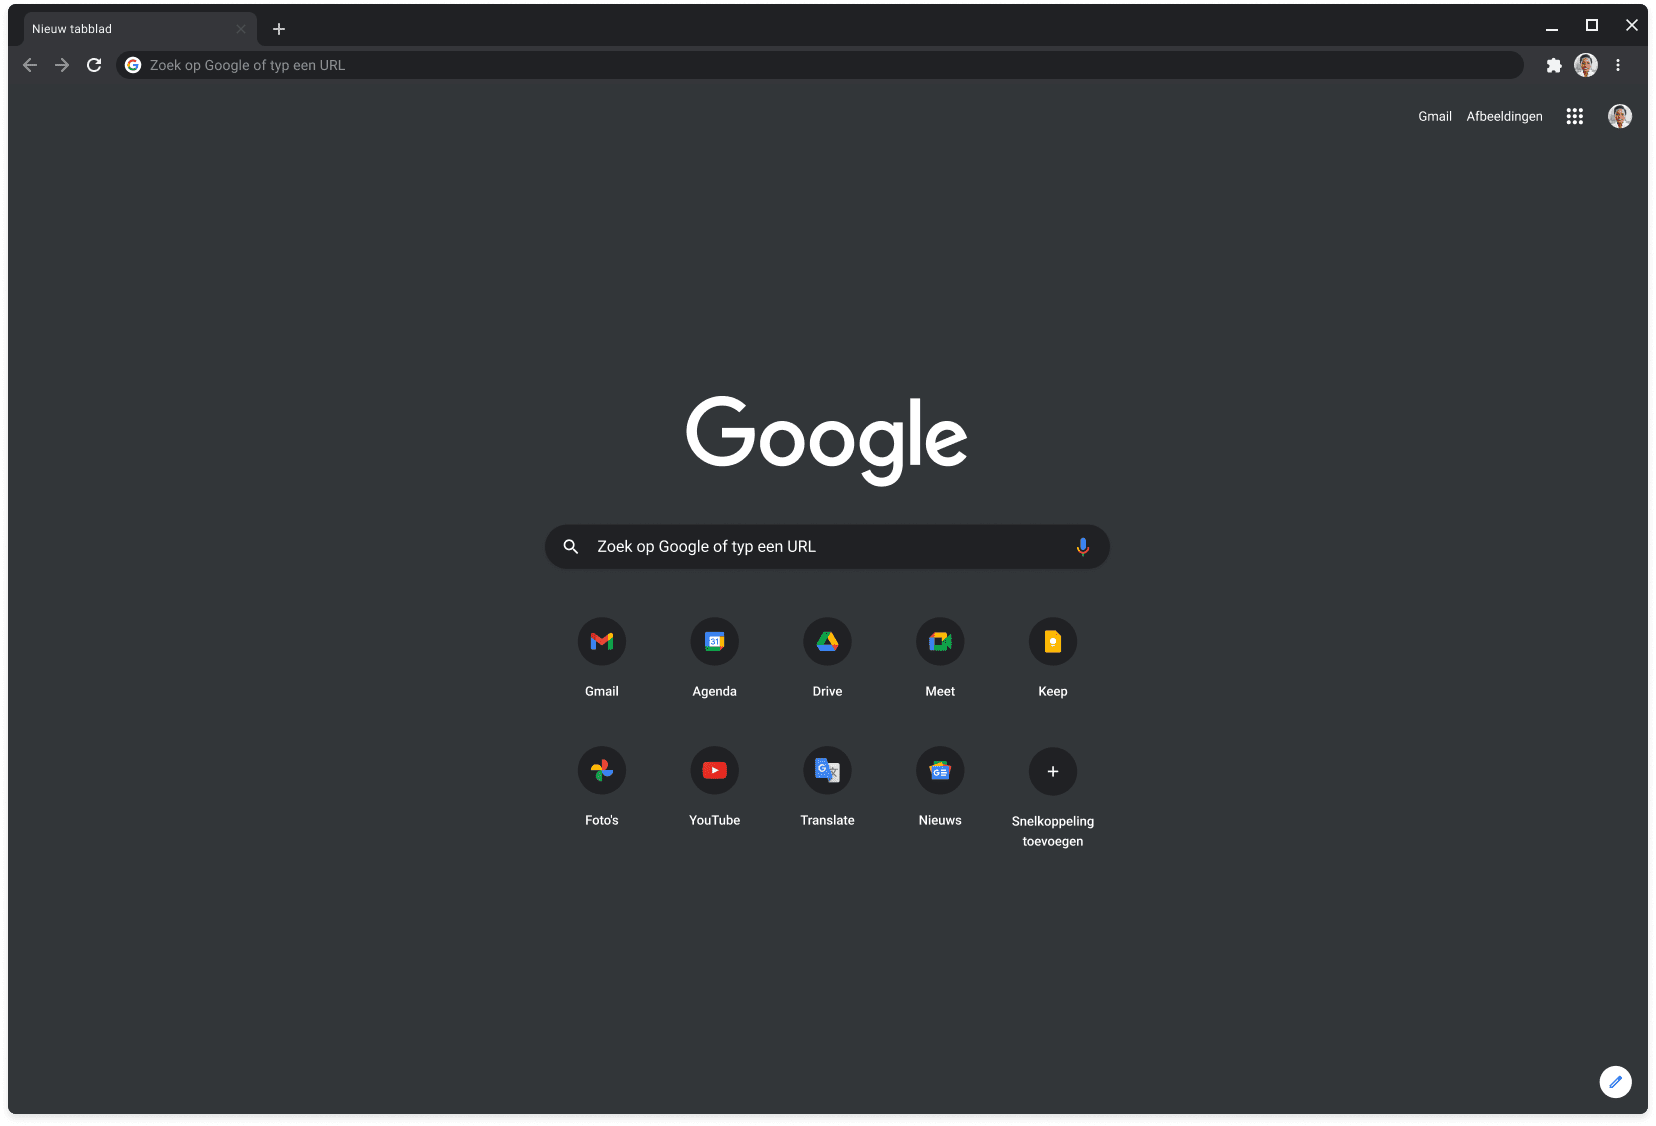 Chrome-browservenster in donkere modus met daarin Google.com.